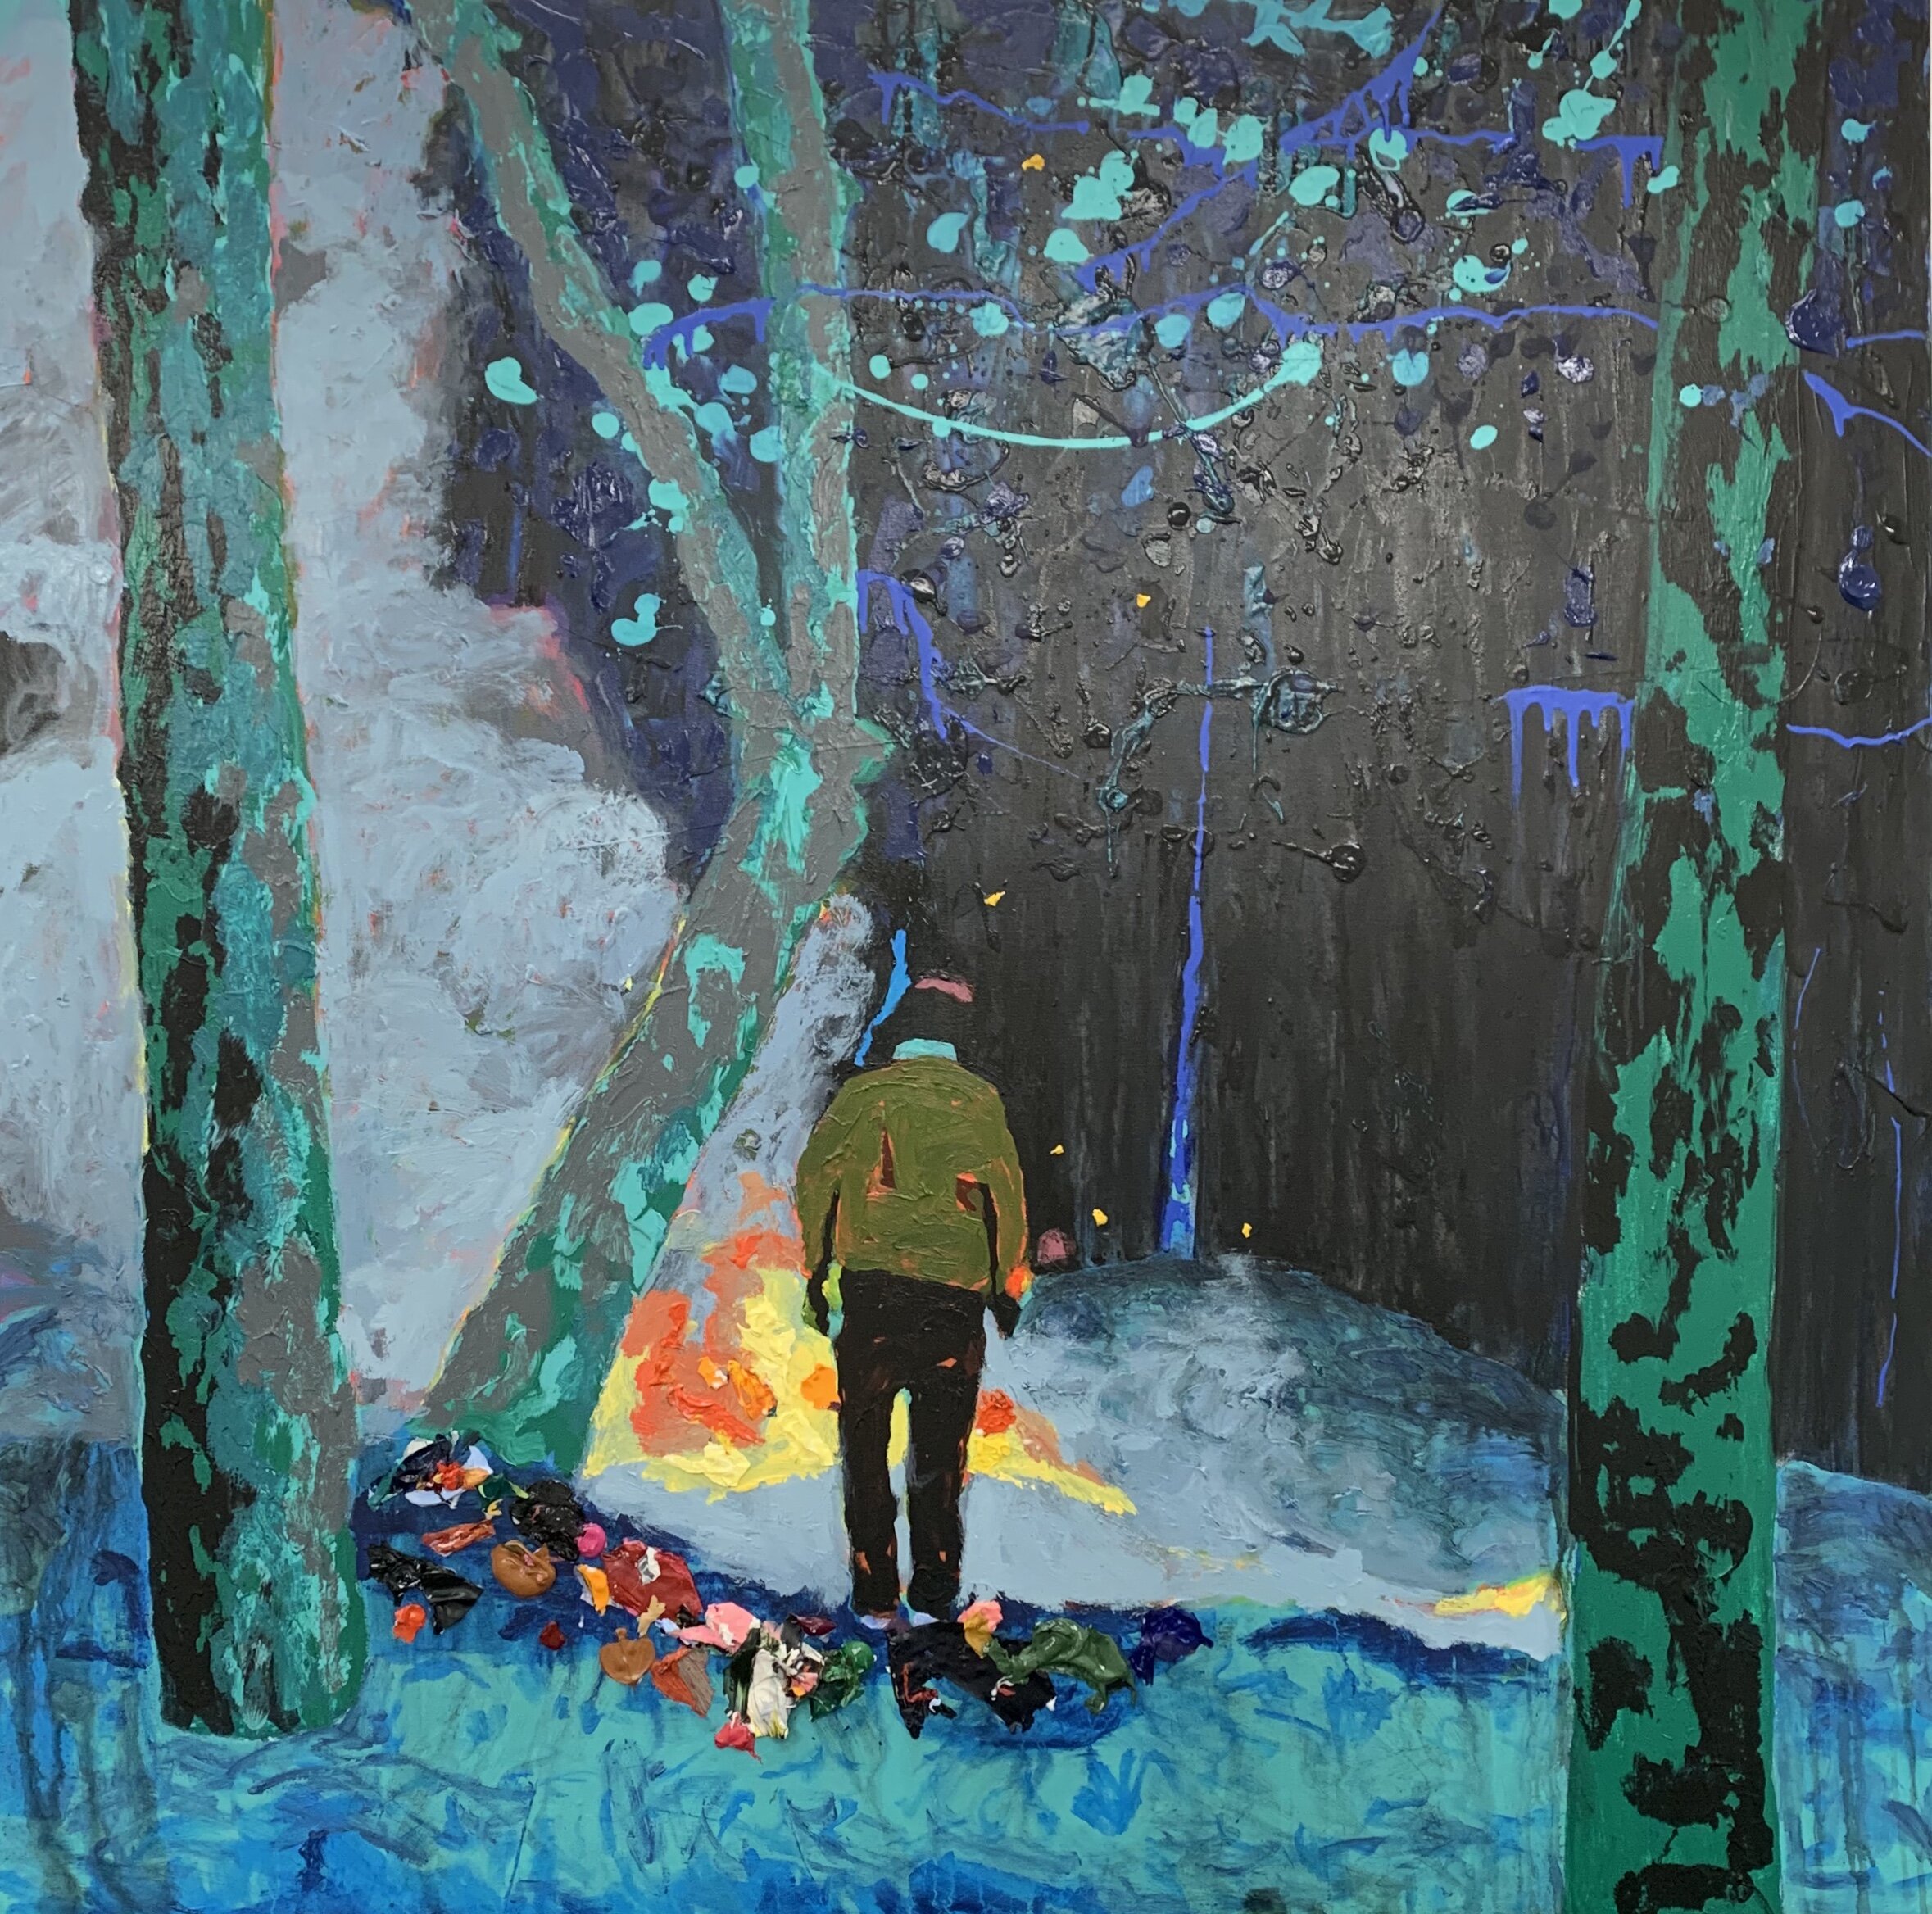    Danny burning trash     48 x 48 x 2” Acrylic on canvas 